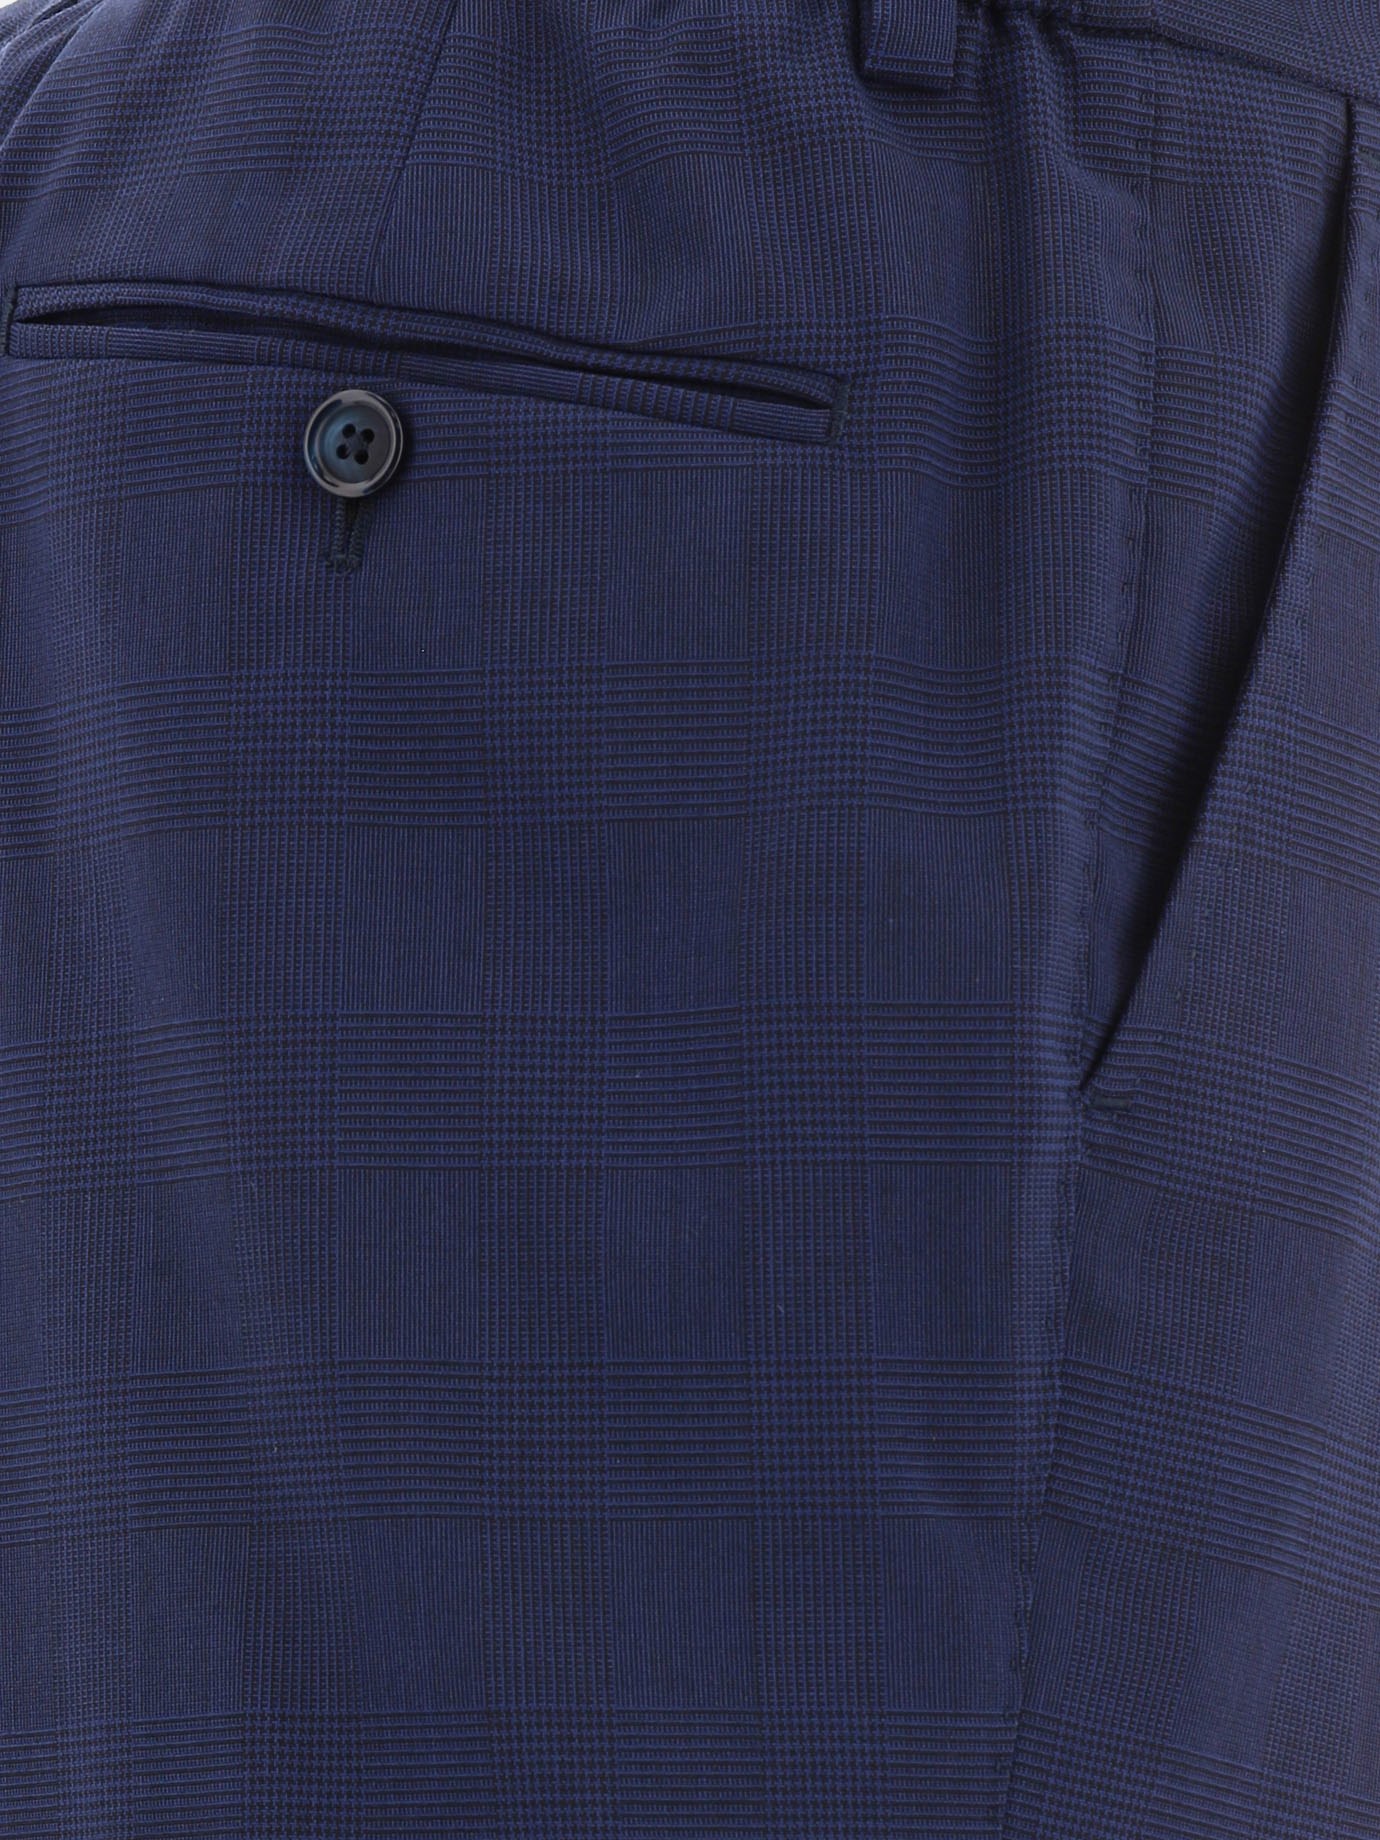 Pantaloni stretch in lana by Dolce & Gabbana